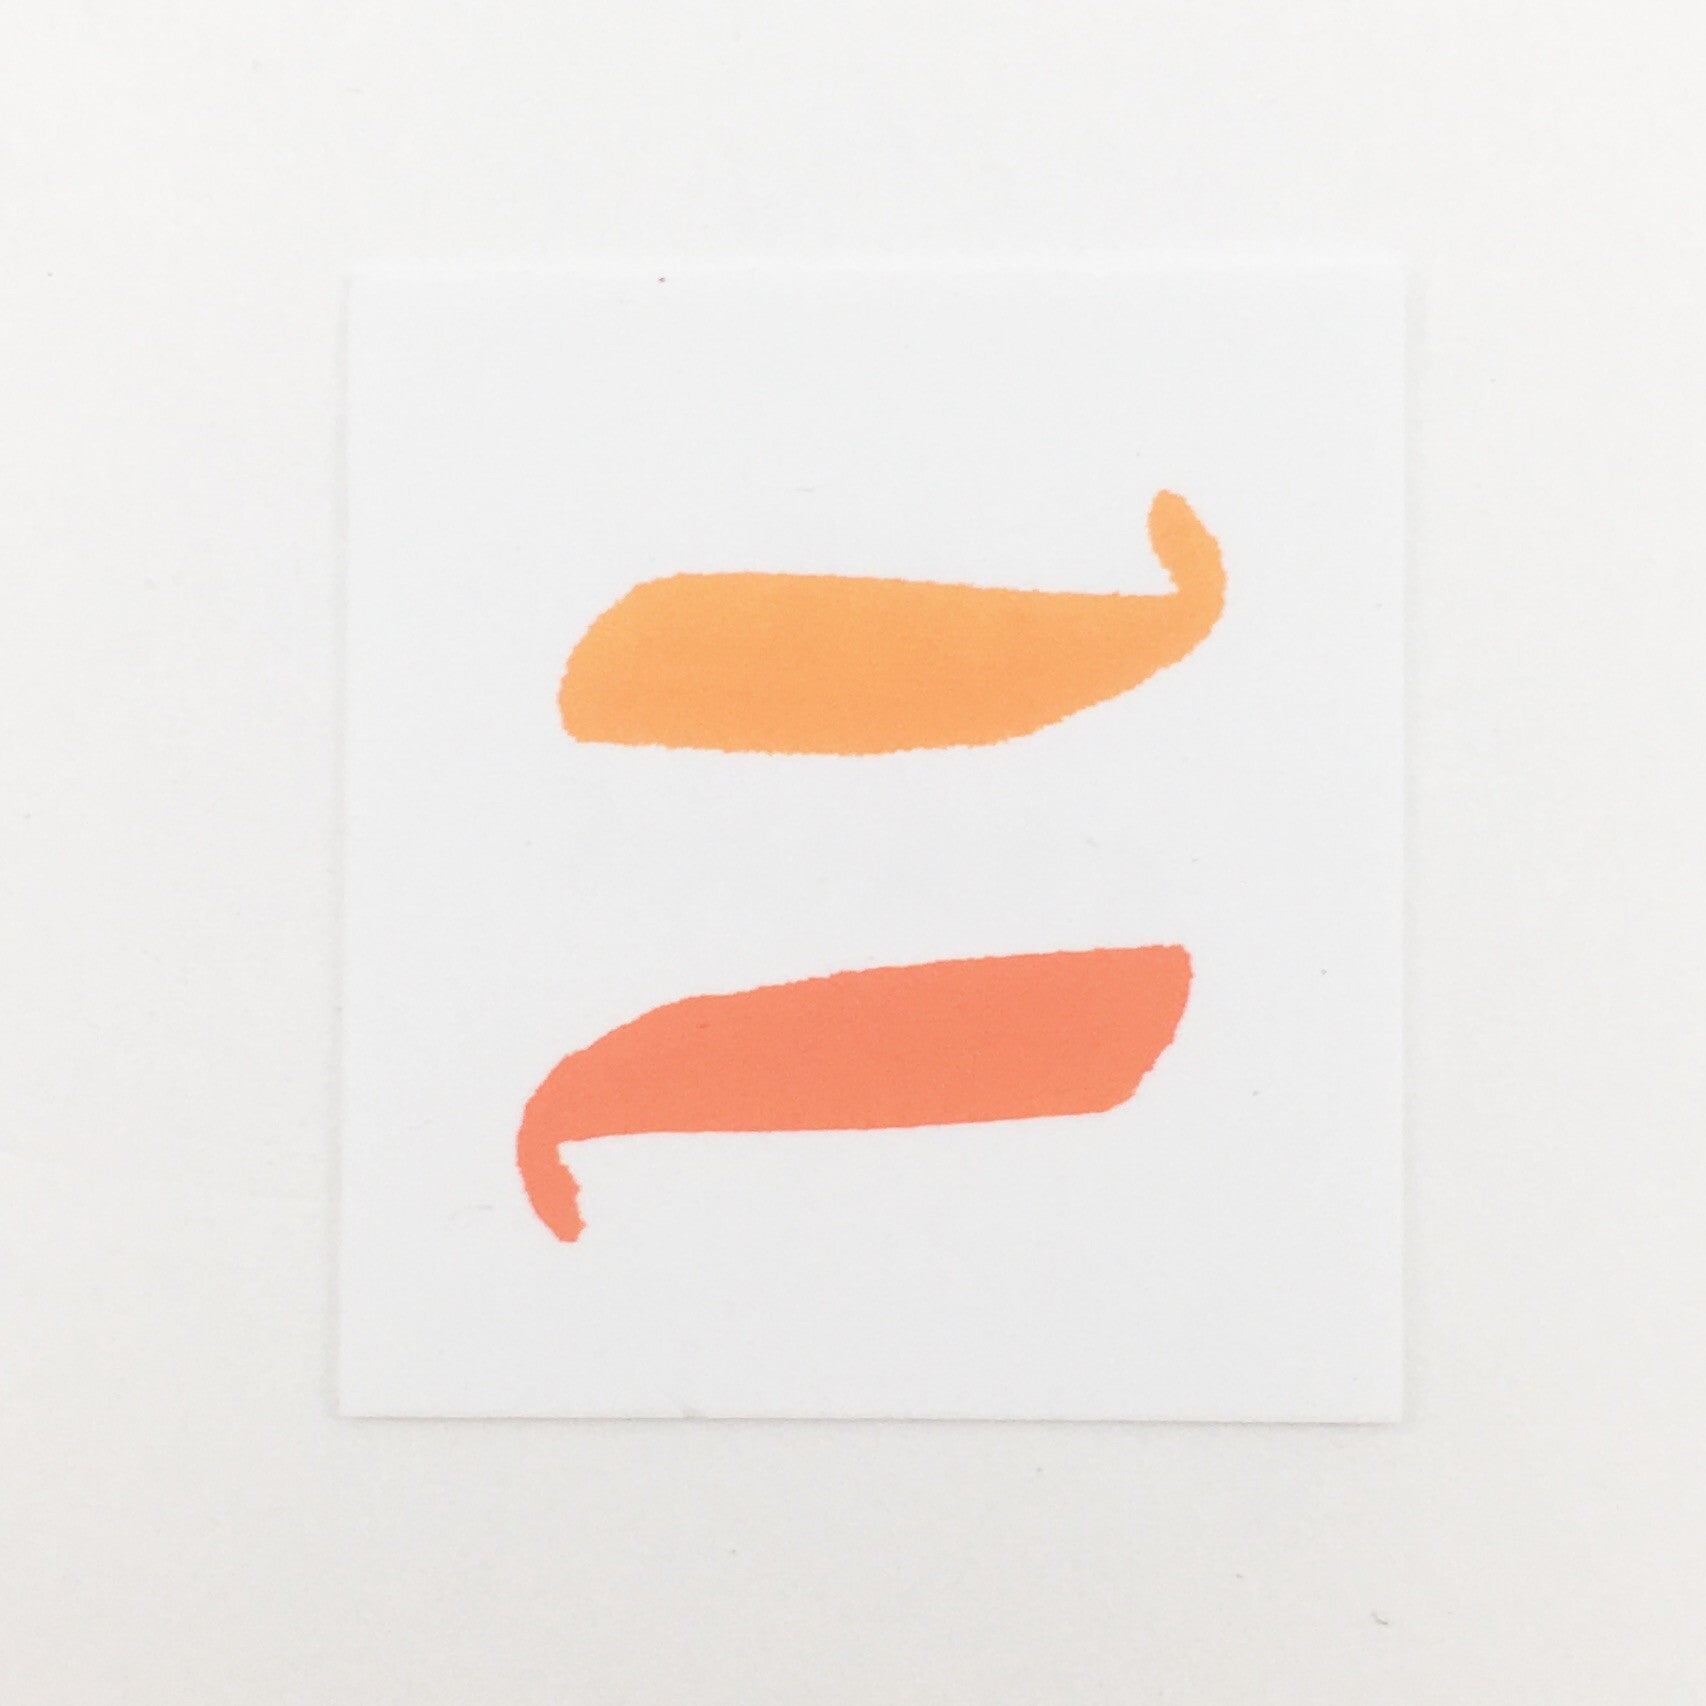 Kuretake Zig "Brushables" Two-Tone Brush Markers - 070 - Pure Orange by Kuretake - K. A. Artist Shop